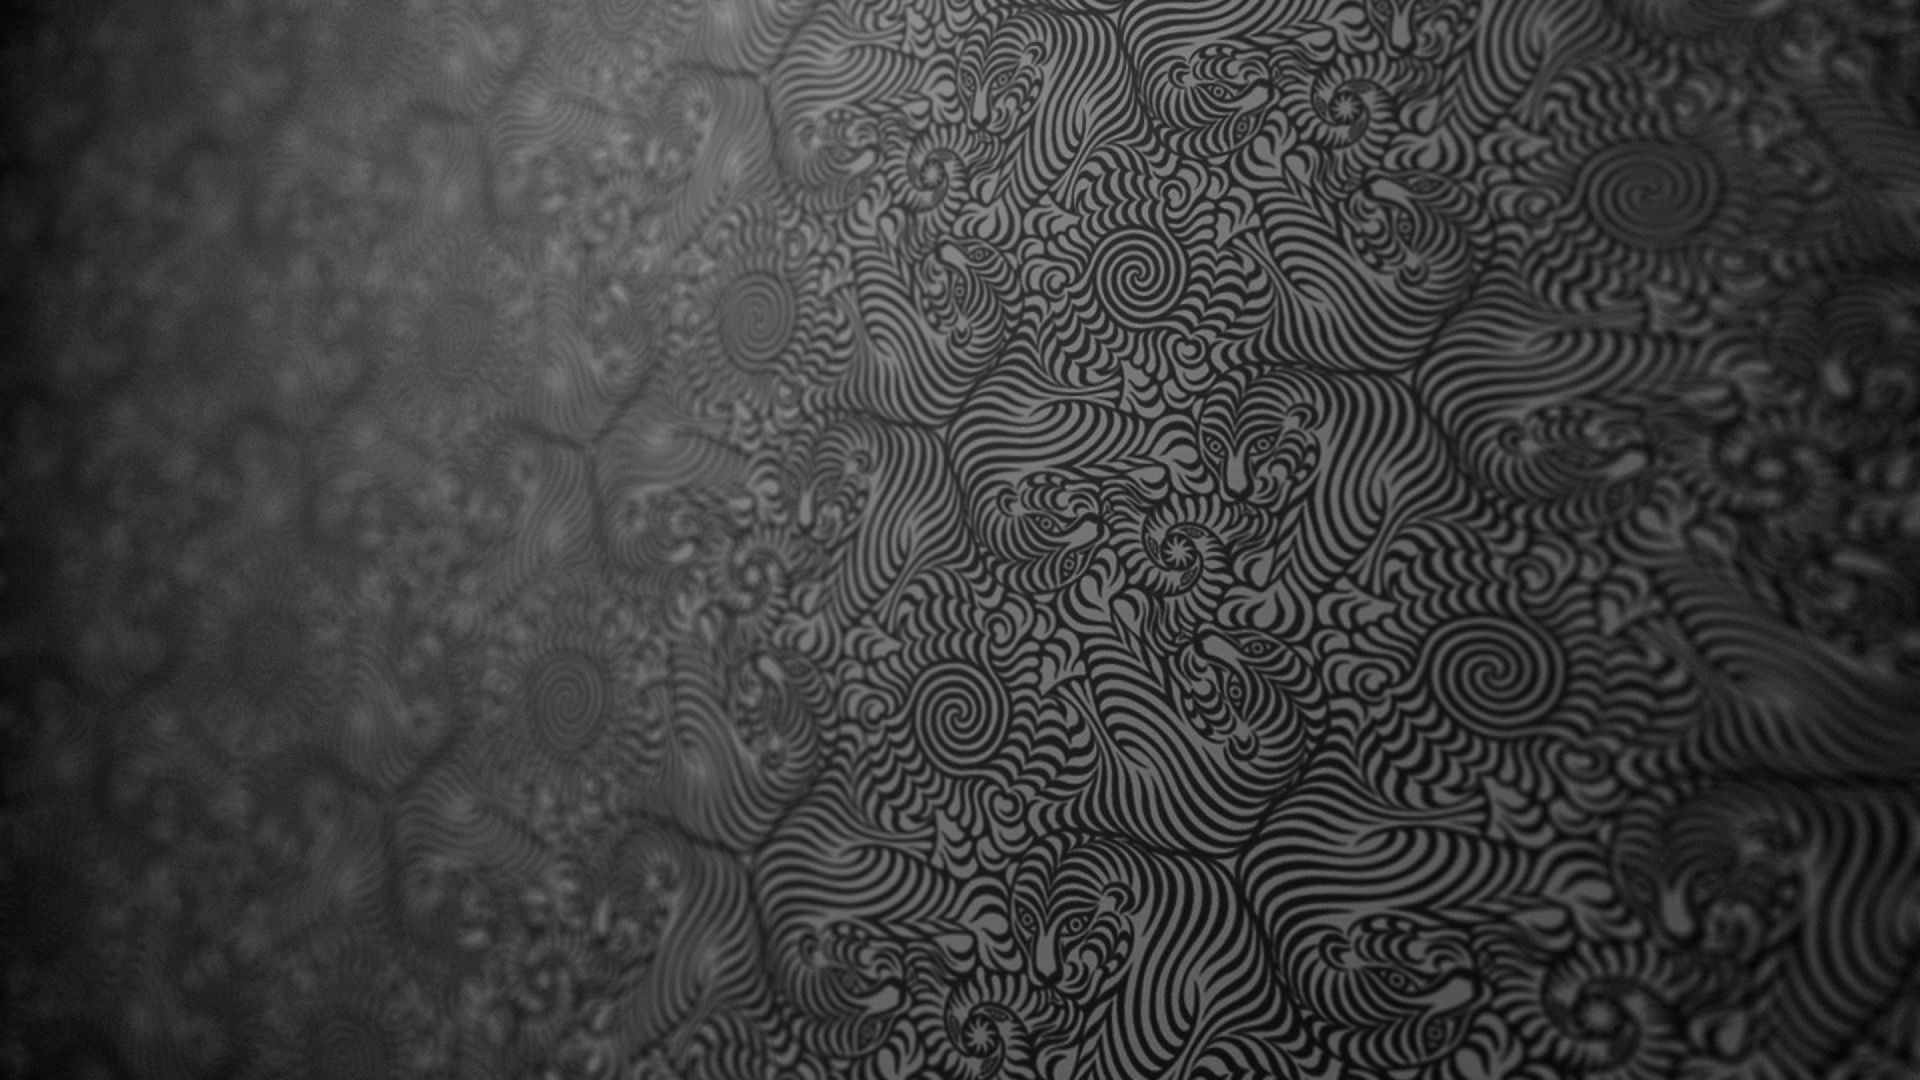 Texture Black White Patterns Tigers Mac Wallpaper Download | Free ...